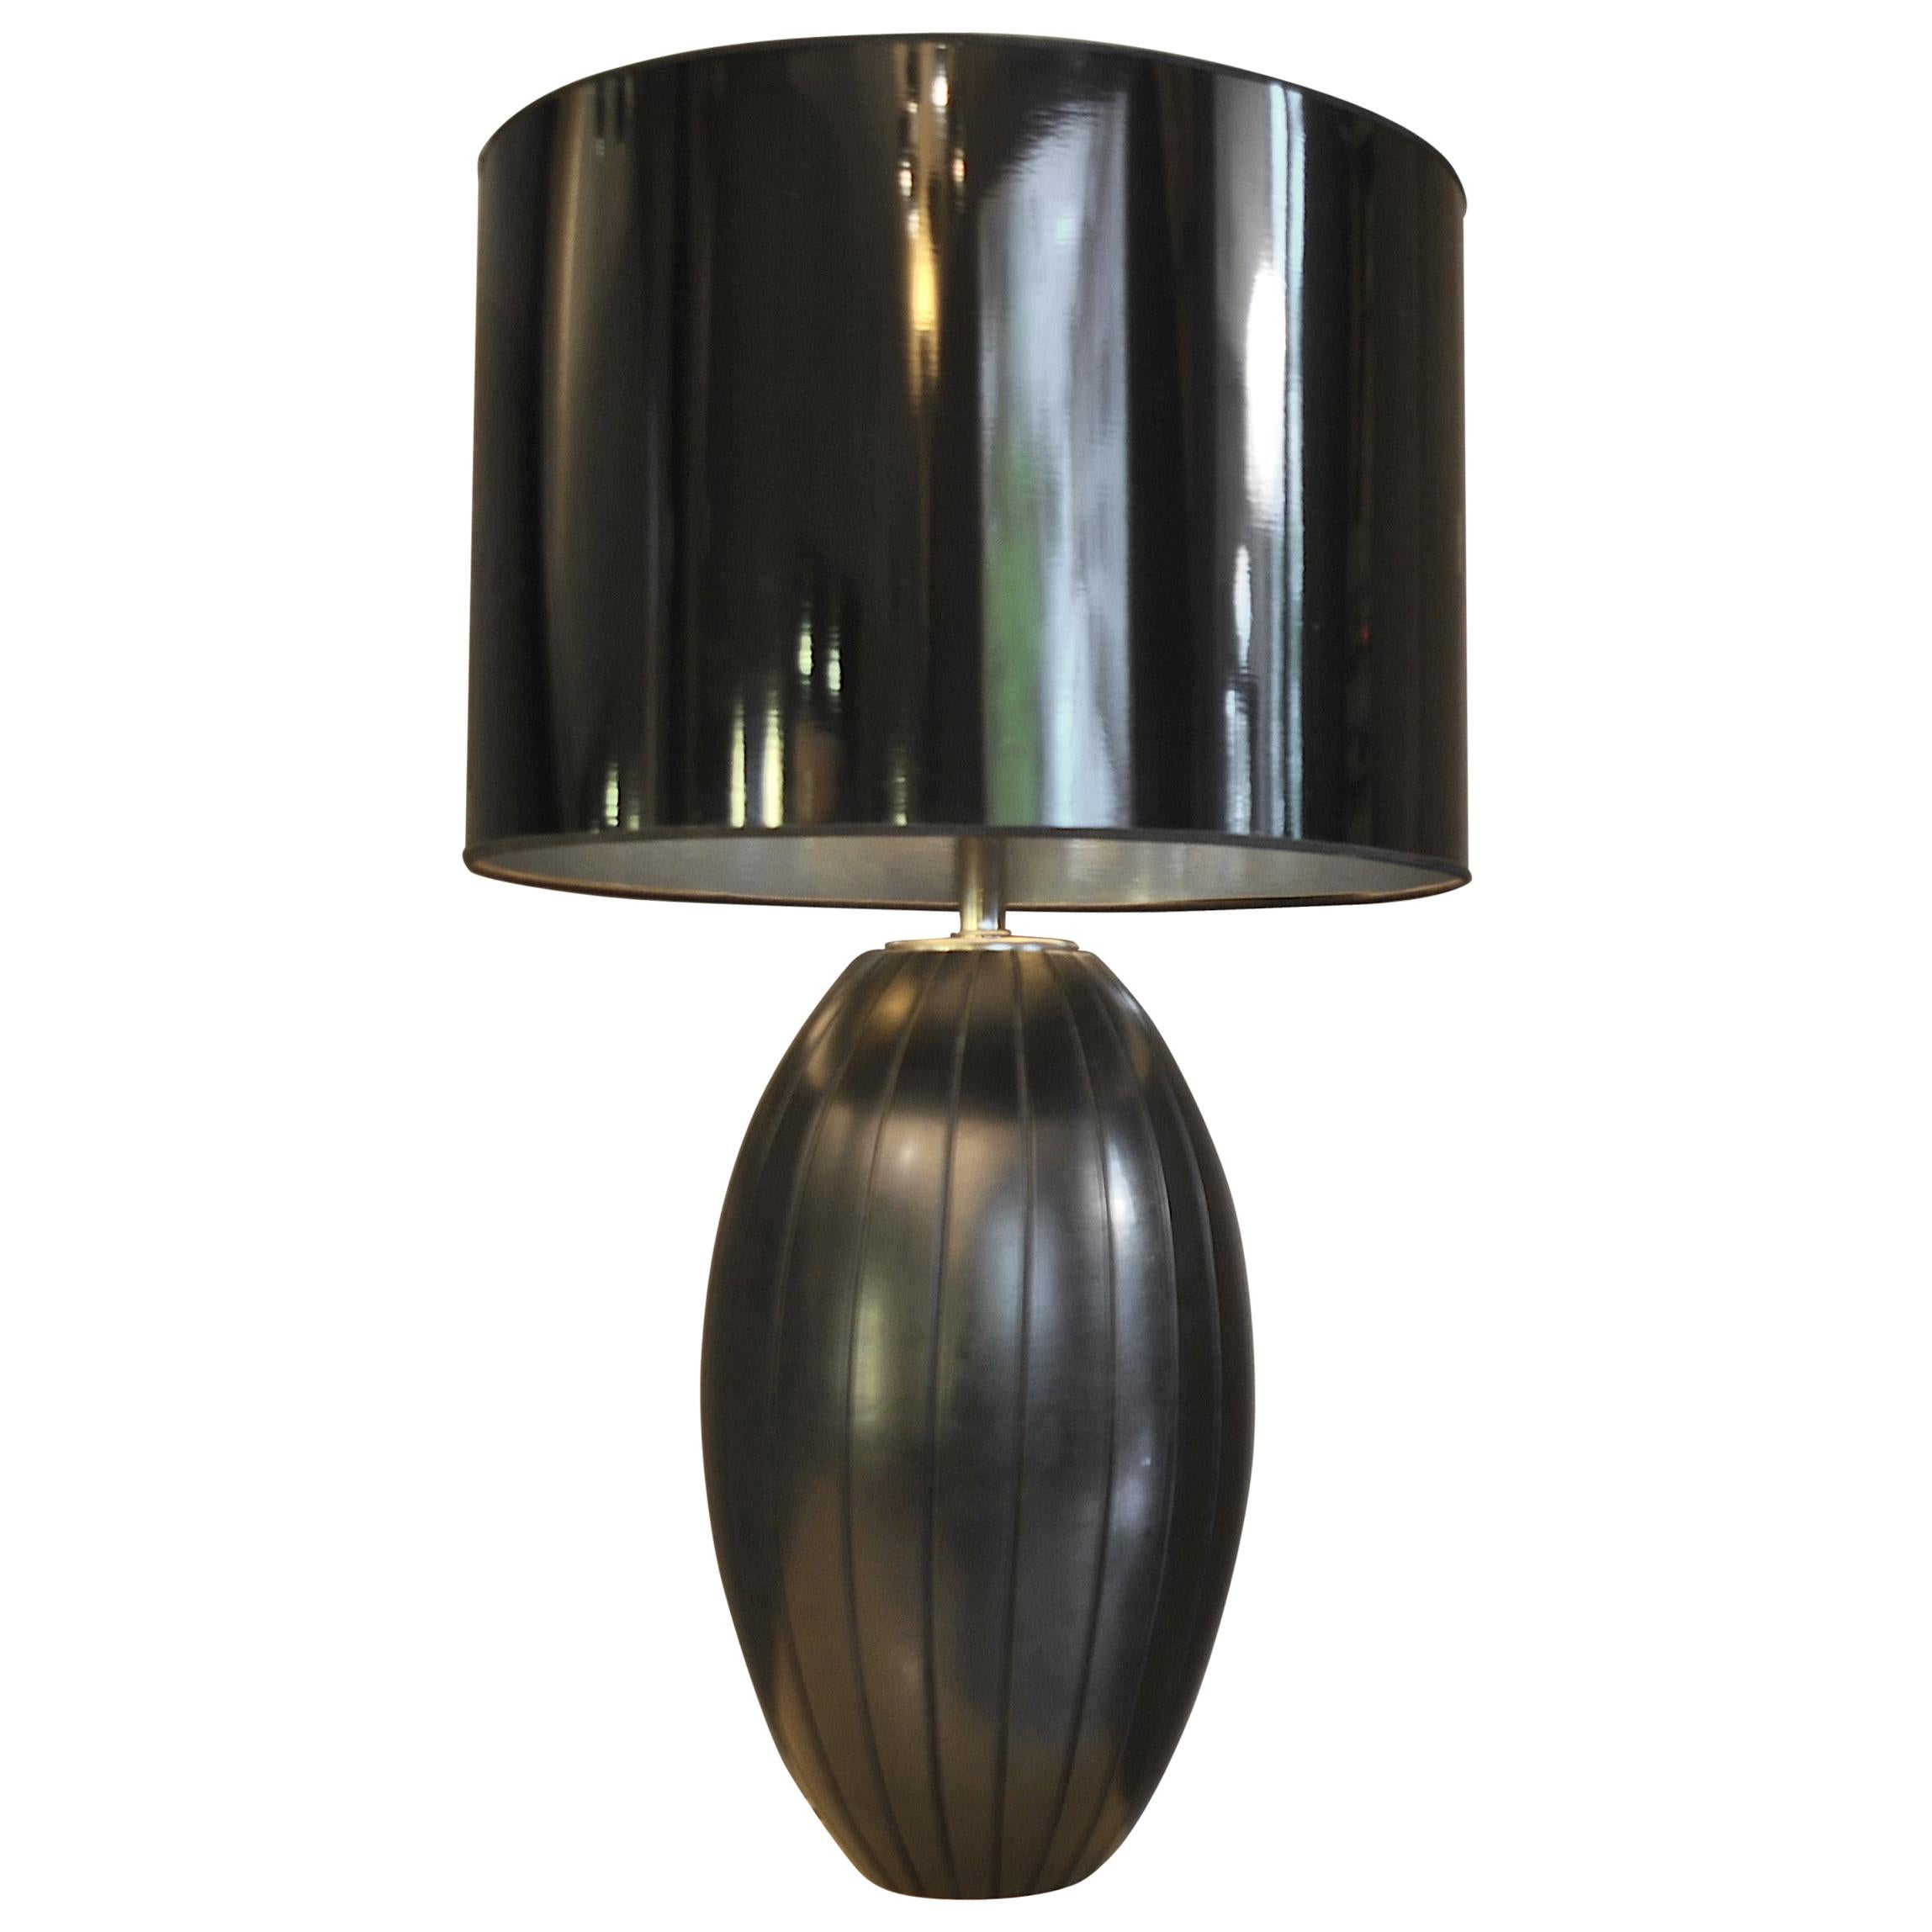 Loffredo Ferdinando Table Lamp in Ceramic and Steel 70 Years